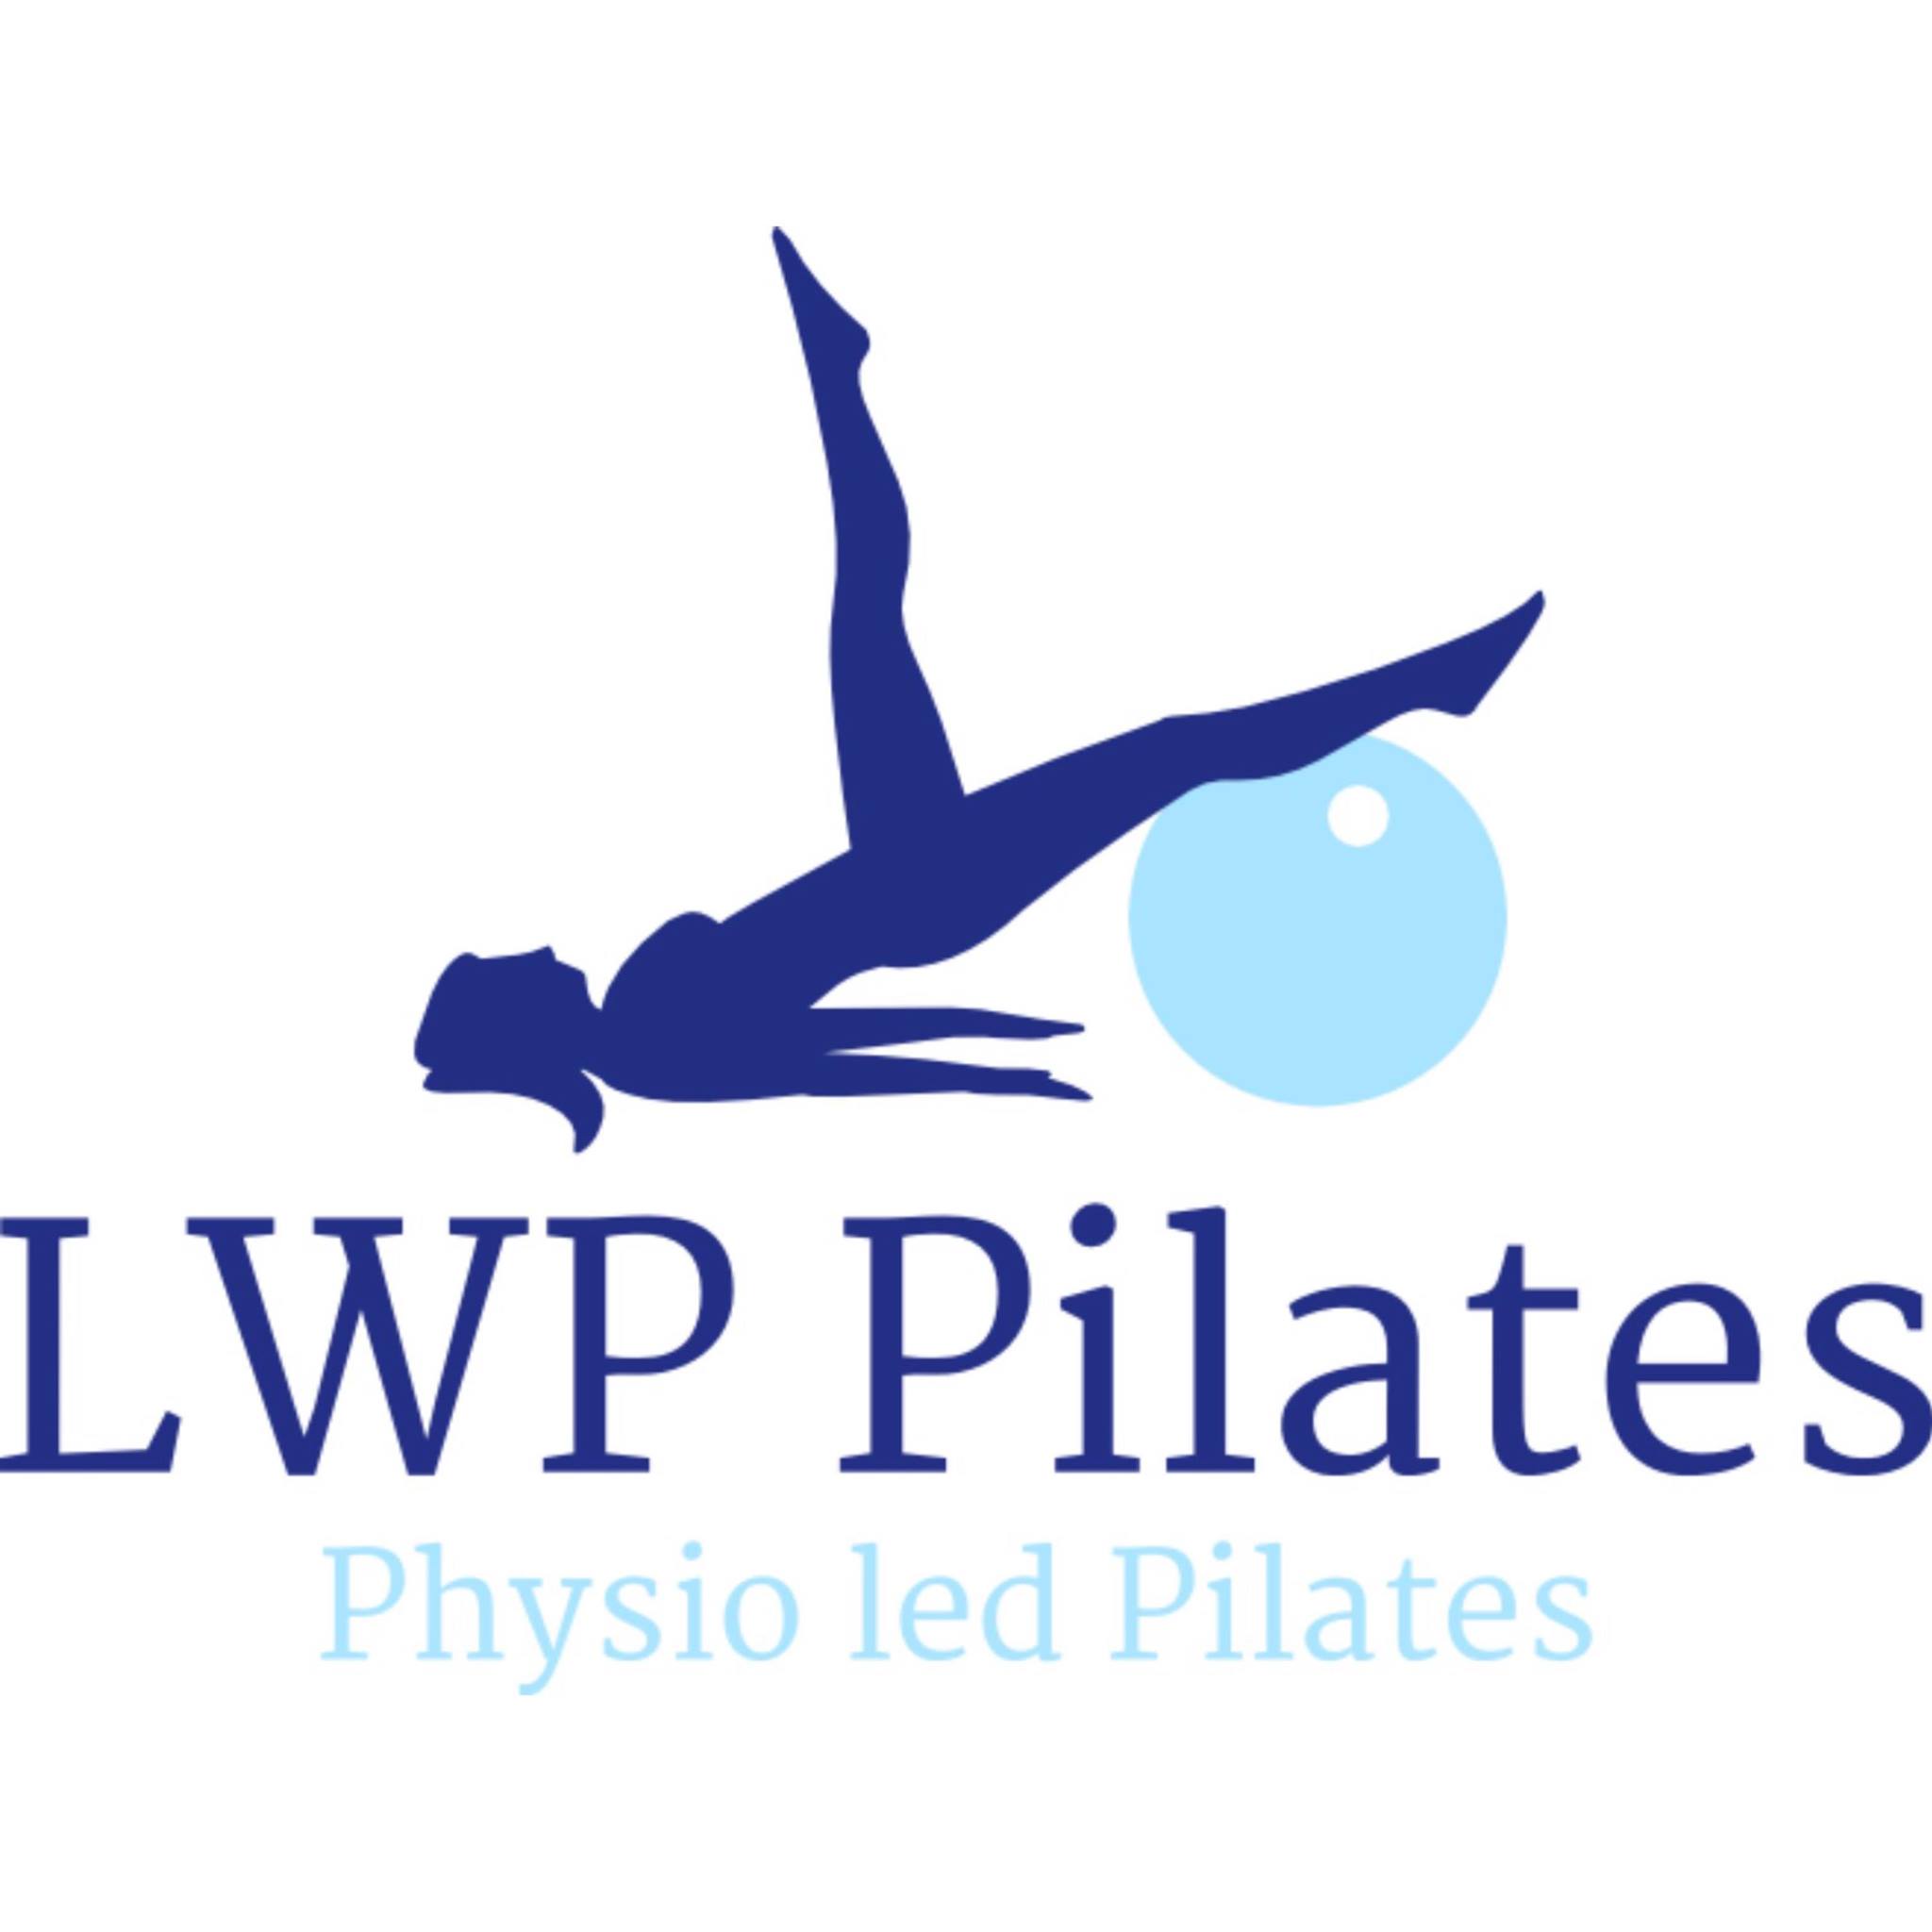 LWP Pilates